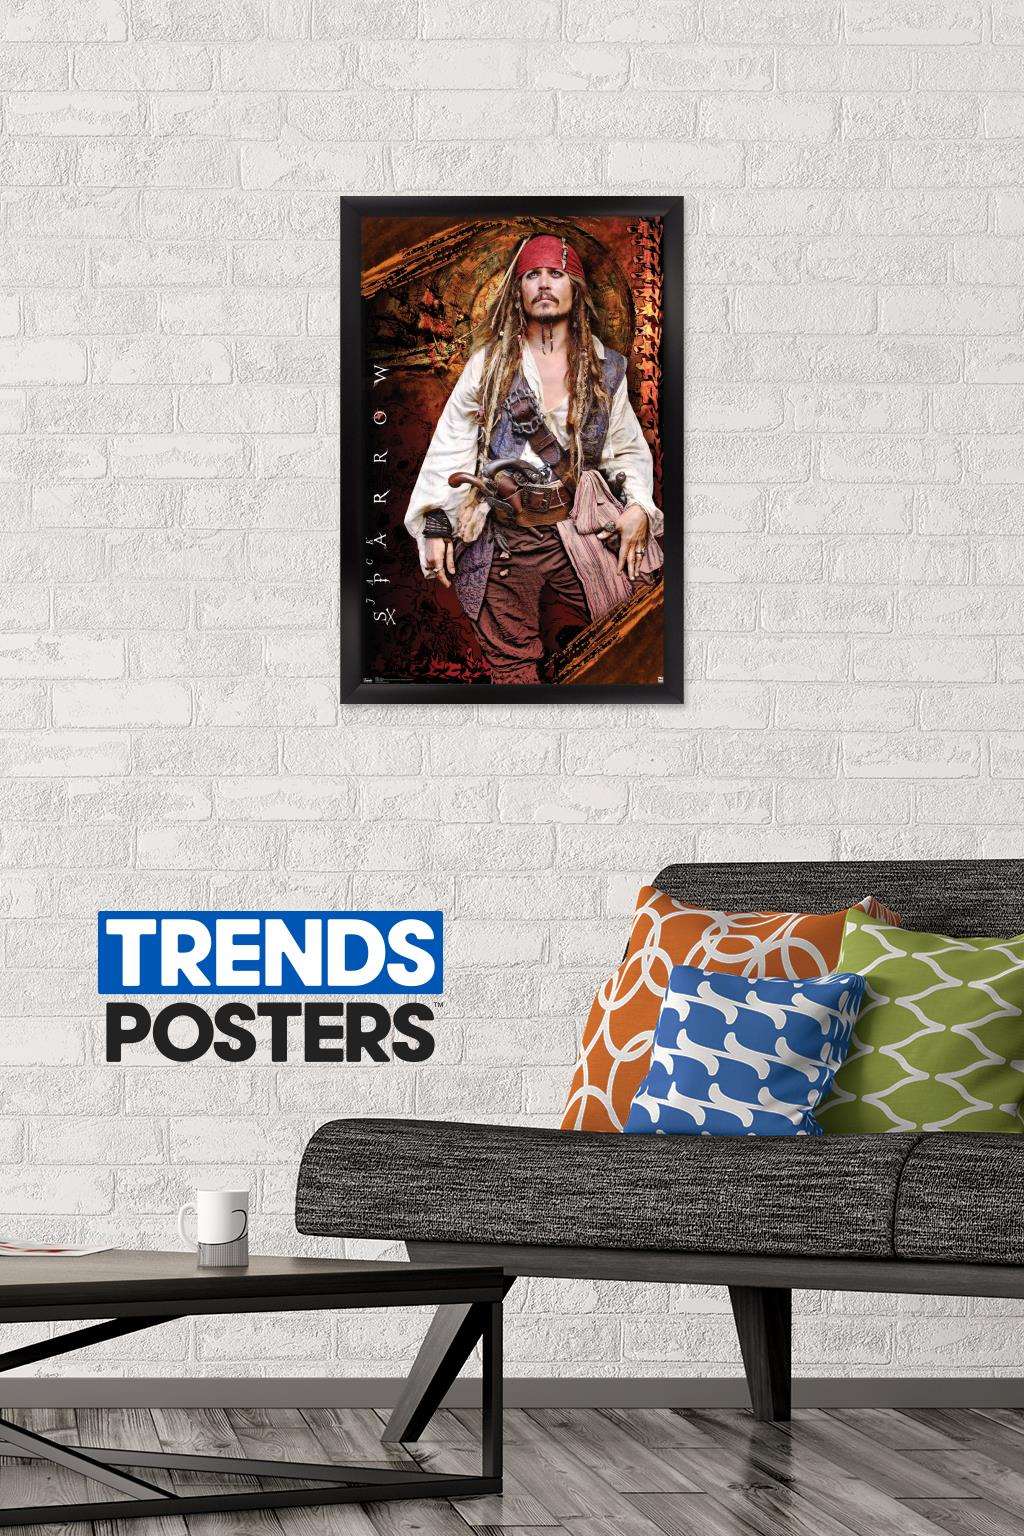 Disney Pirates of the Caribbean: On Stranger Tides - Johnny Depp Wall Poster, 14.725" x 22.375", Framed - image 2 of 5